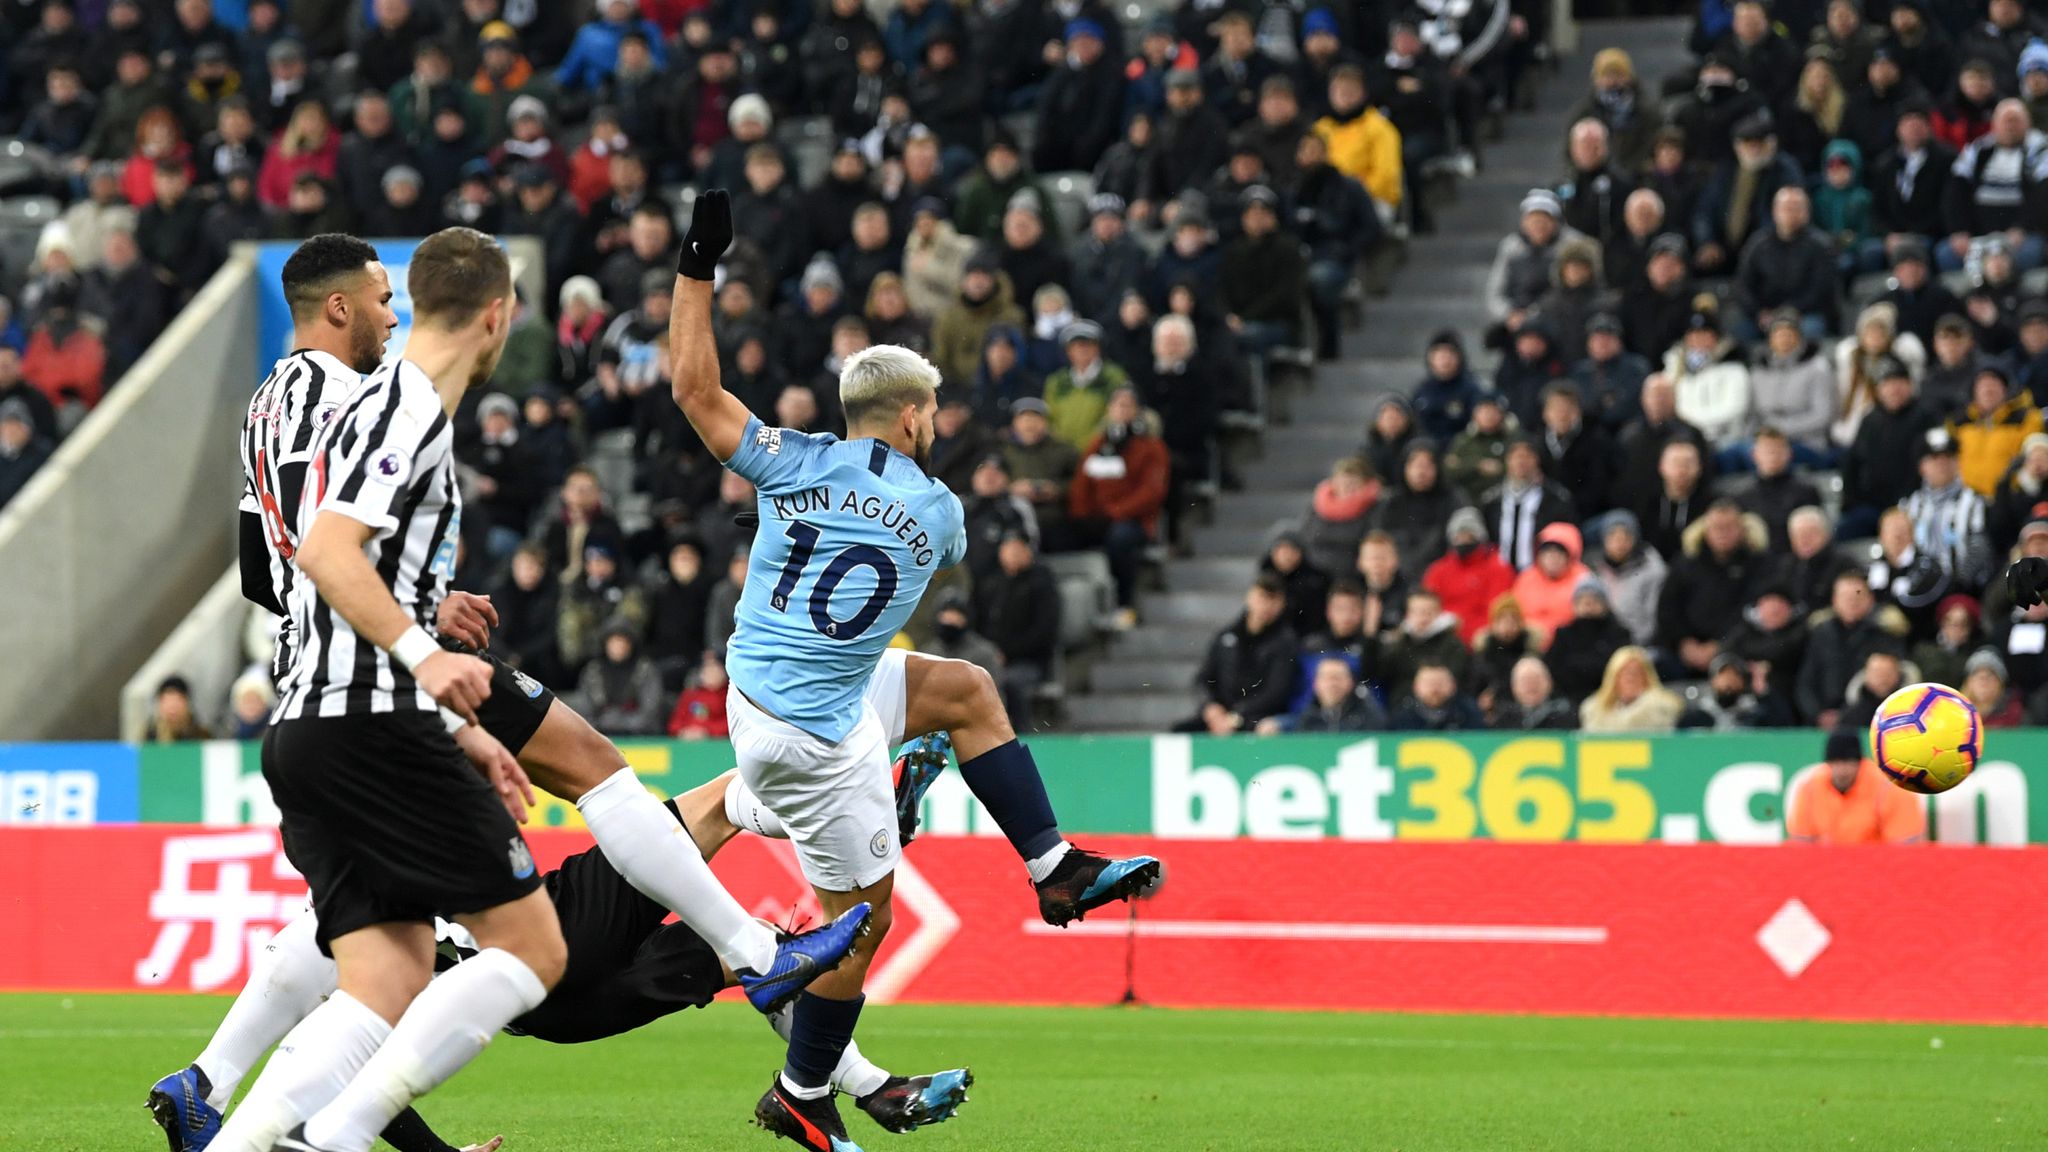 Newcastle 2 - 1 Man City - Match Report & Highlights